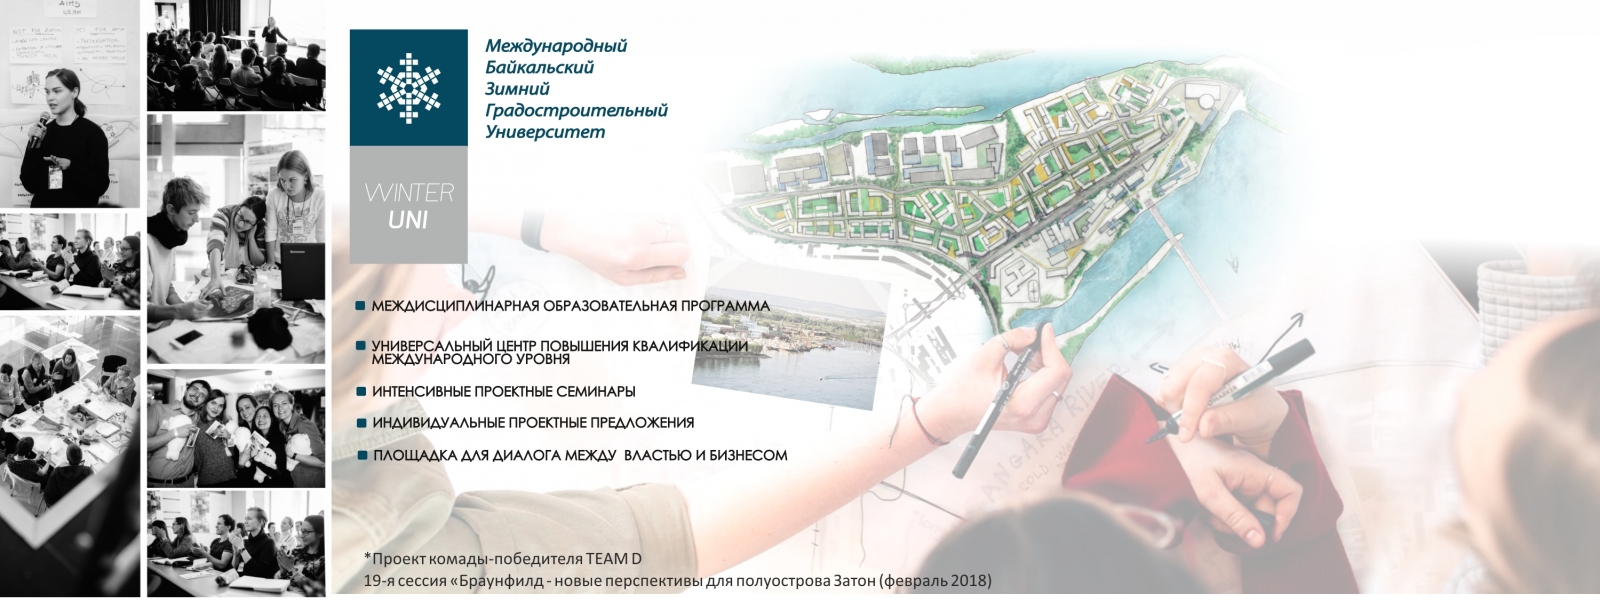 work-Градостроительный воркшоп “Международный Байкальский зимний градостроительный университет” (International Baikal Winter University Of Urban Planning)